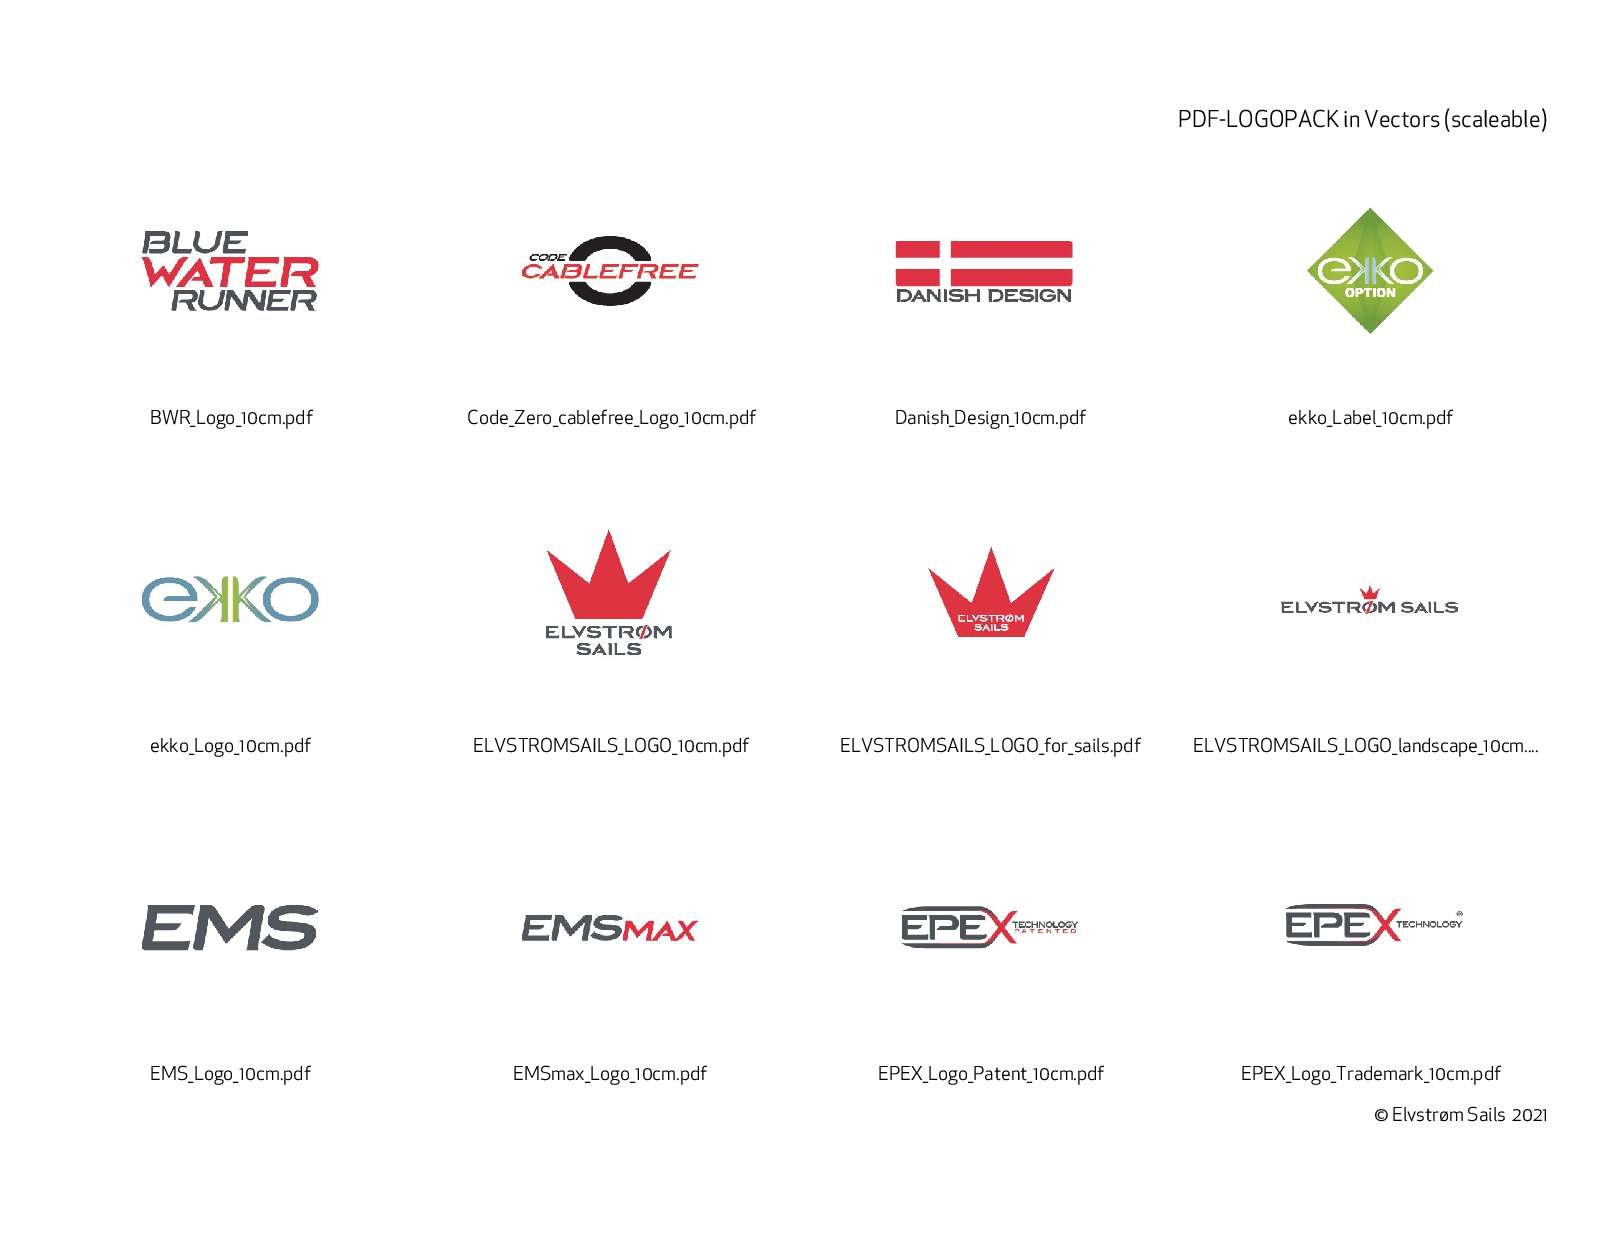 Elvstrom Sails Logopack pdf overview